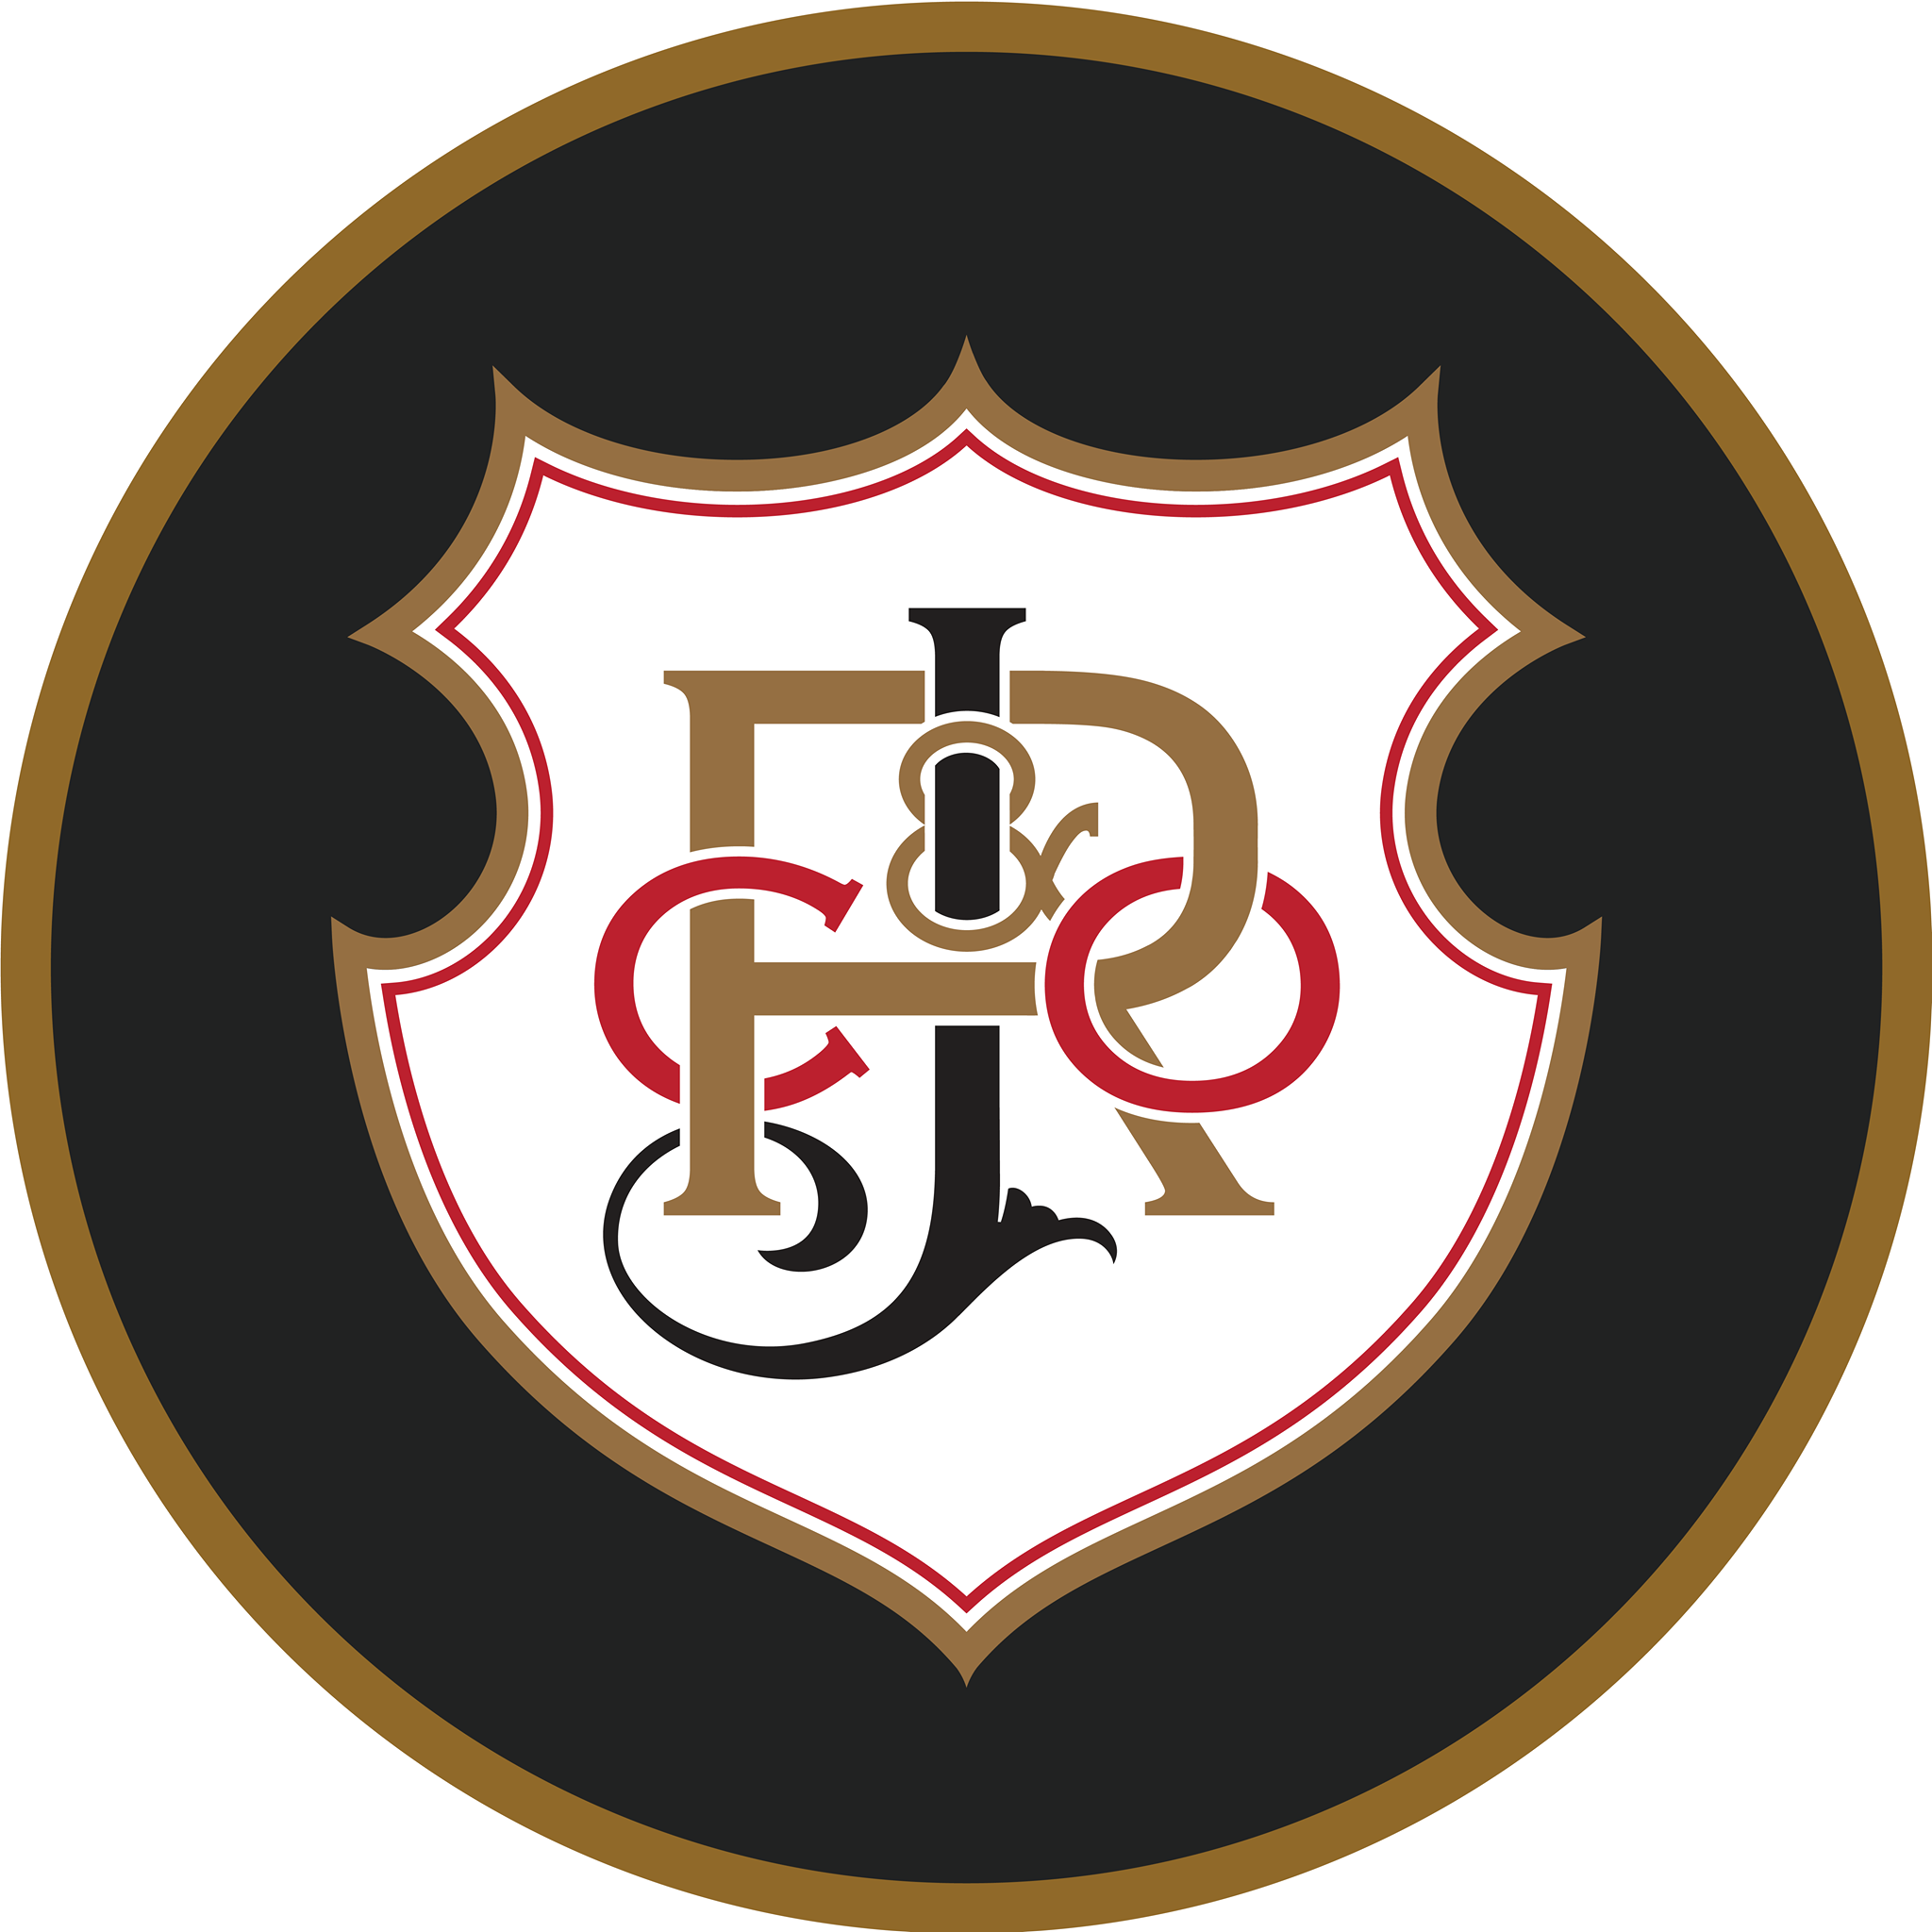 J Rieger & Co logo